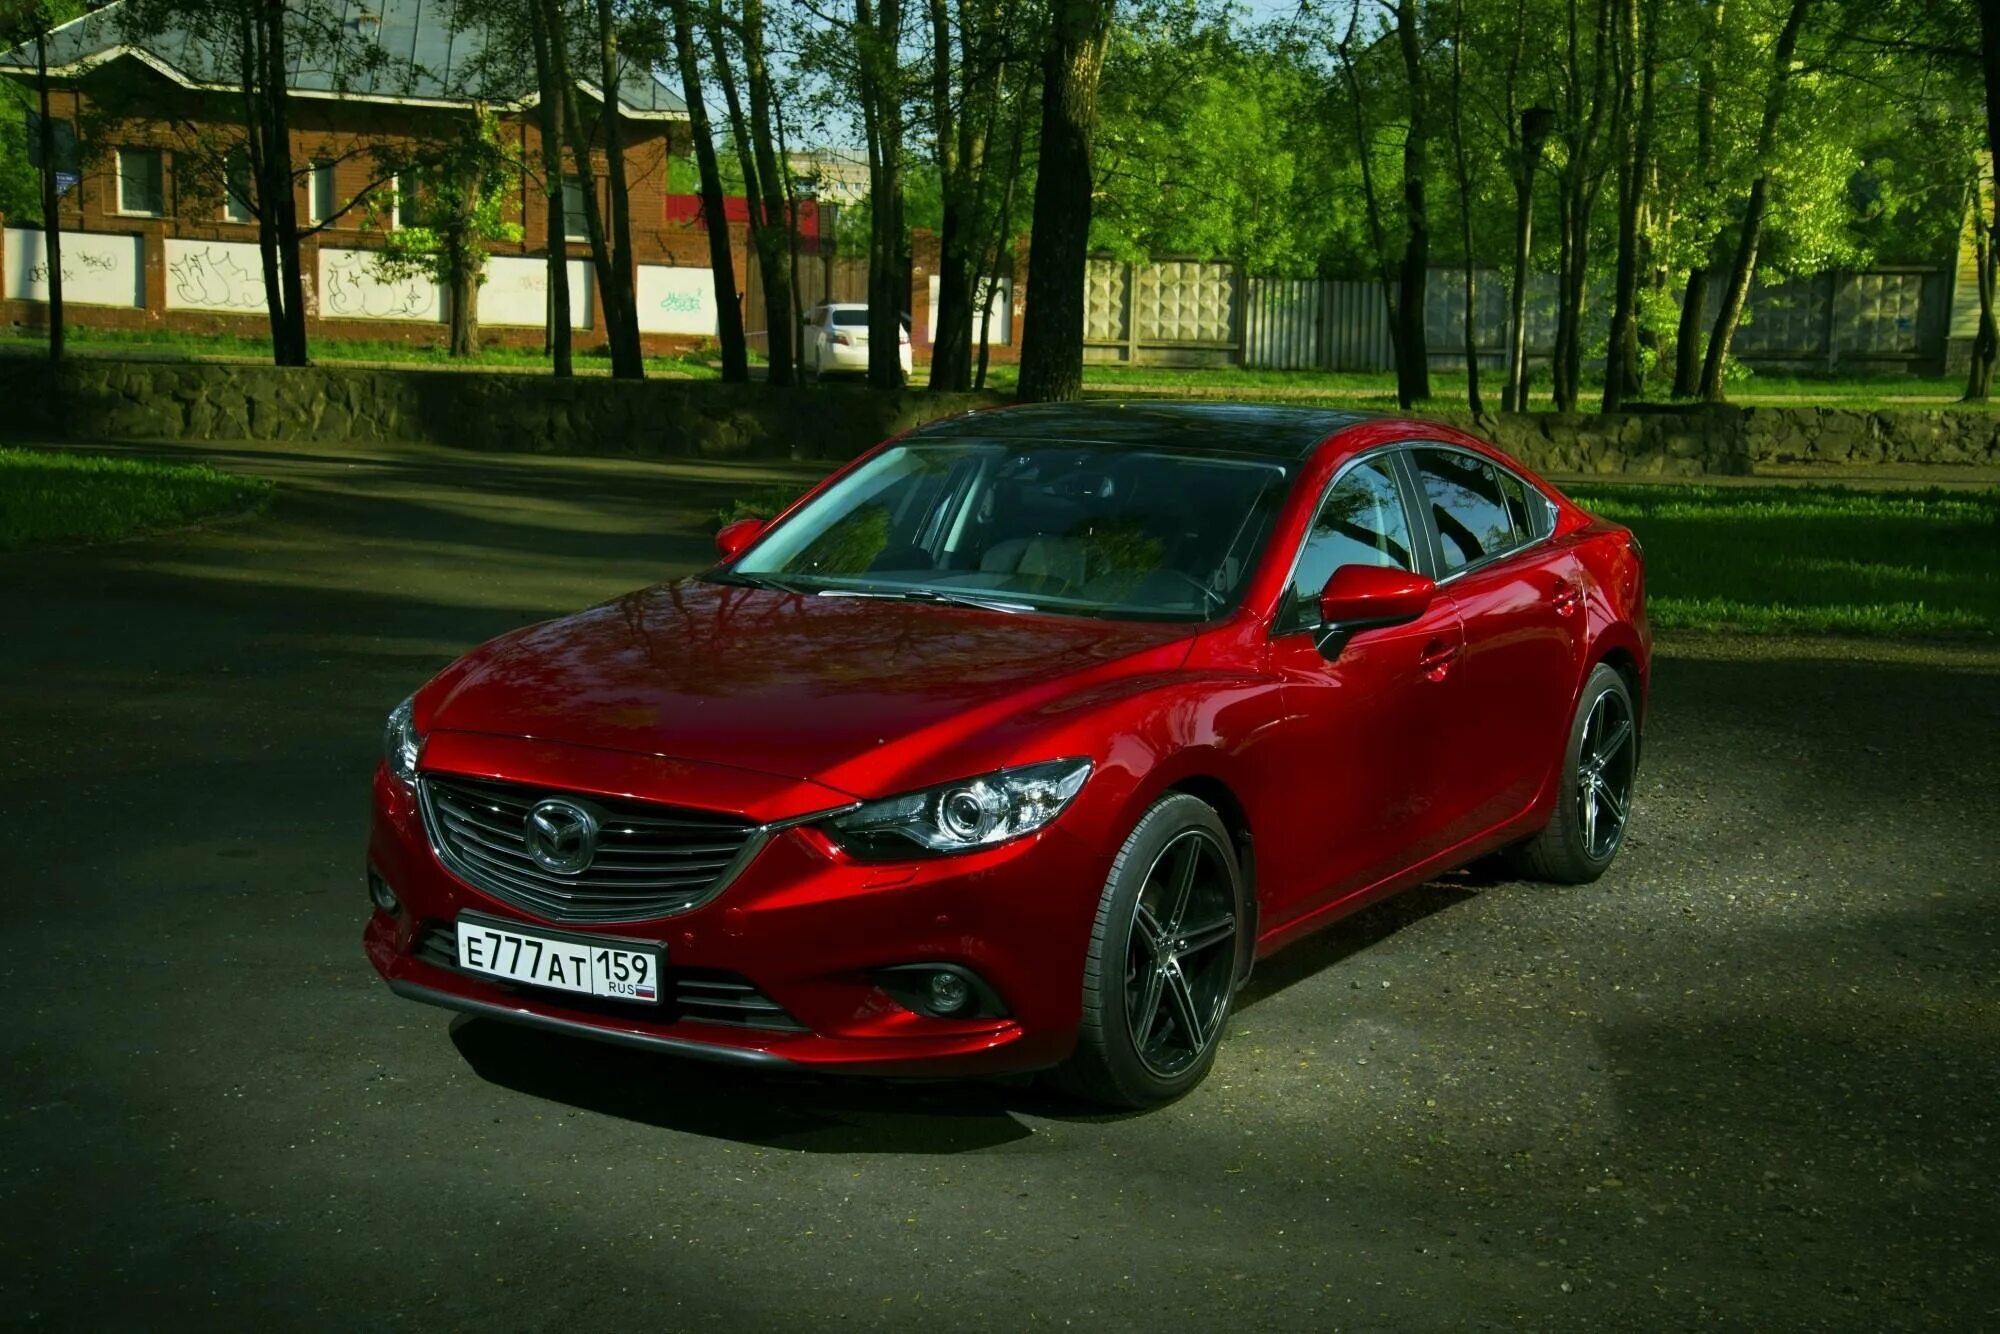 Mazda 6 Red. Мазда 6 2015 года красная. Мазда 6 красная новый кузов. Мазда 6 красная седан. Нужна на мазду 6